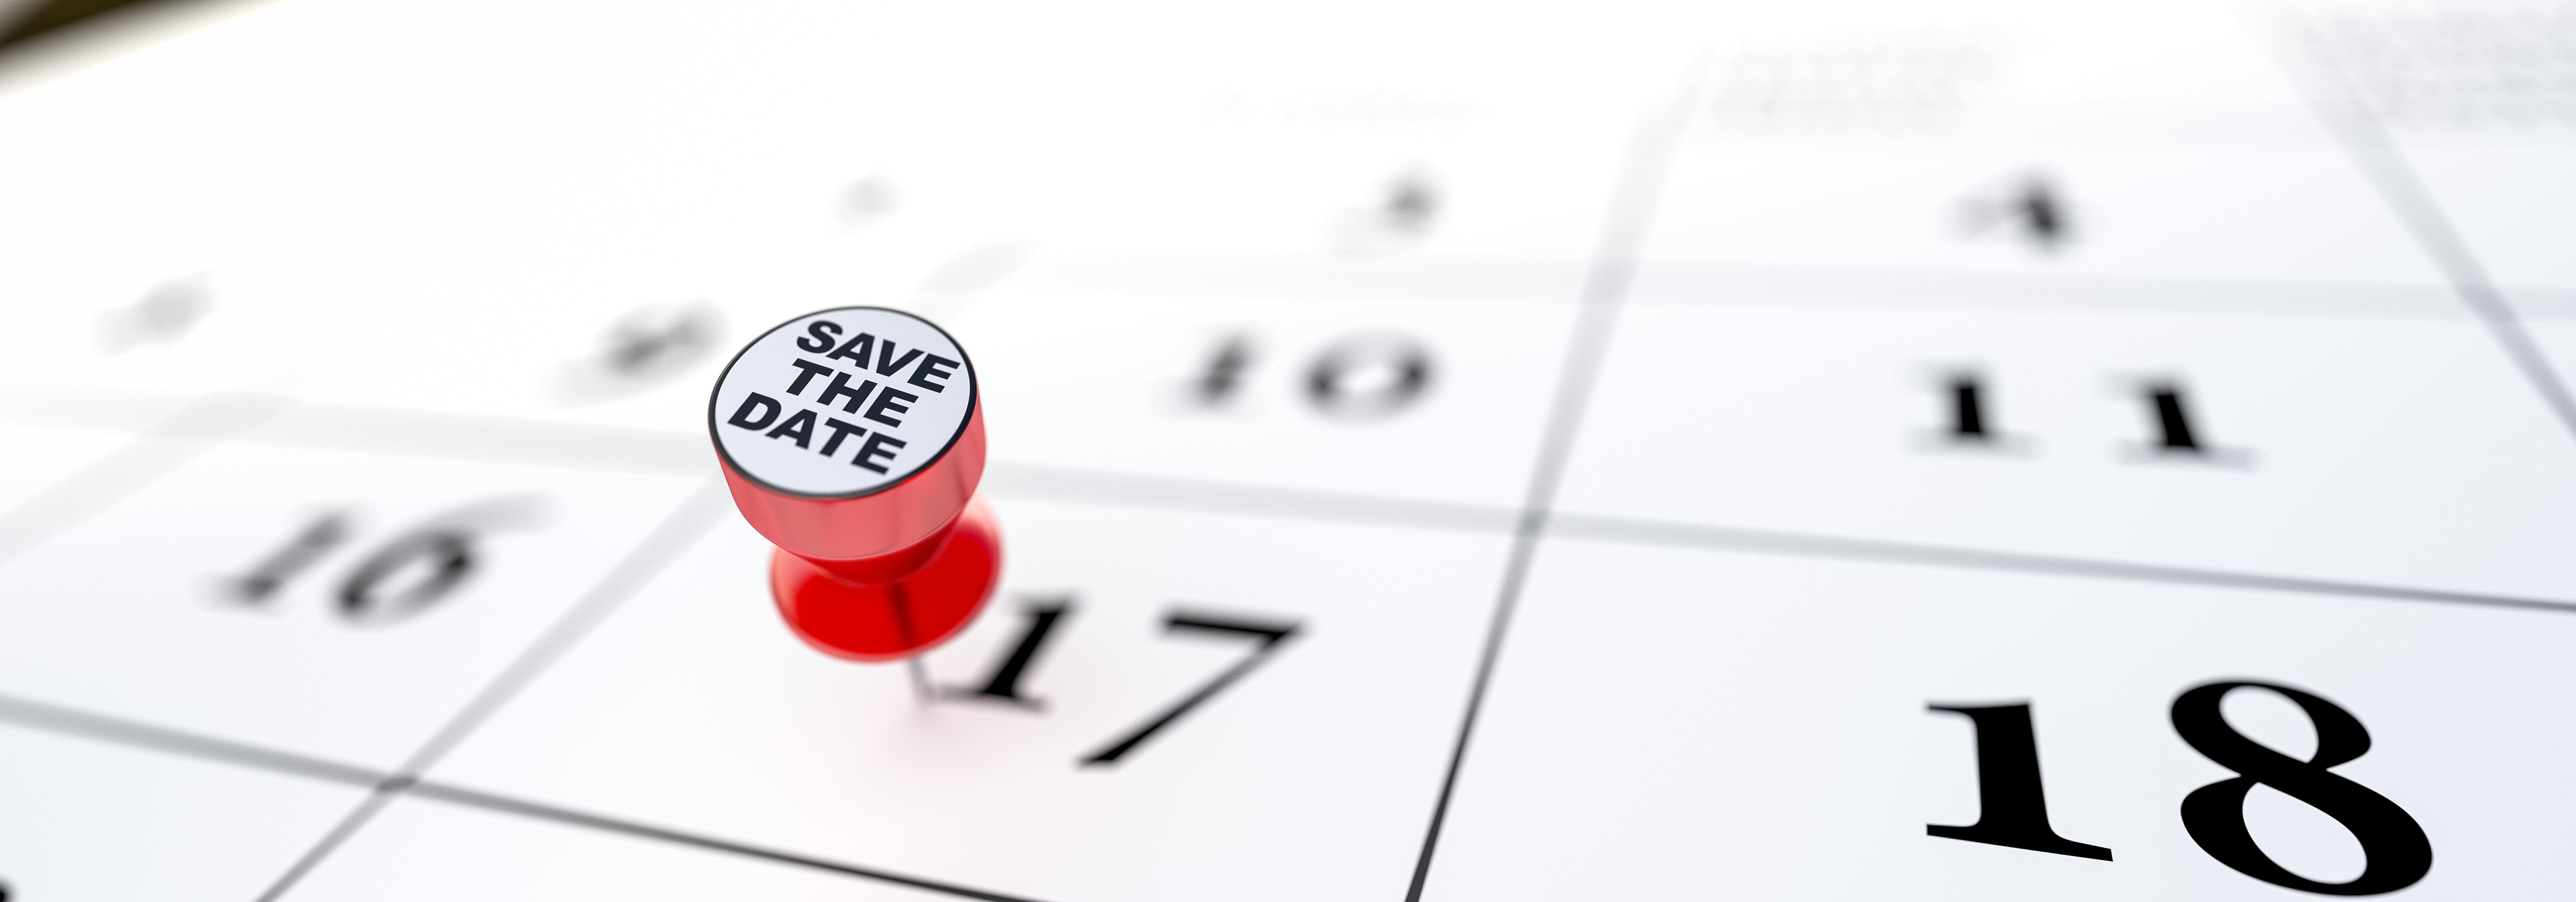 Foto: Pin "Save the date" steckt in Papierkalender mit Terminen